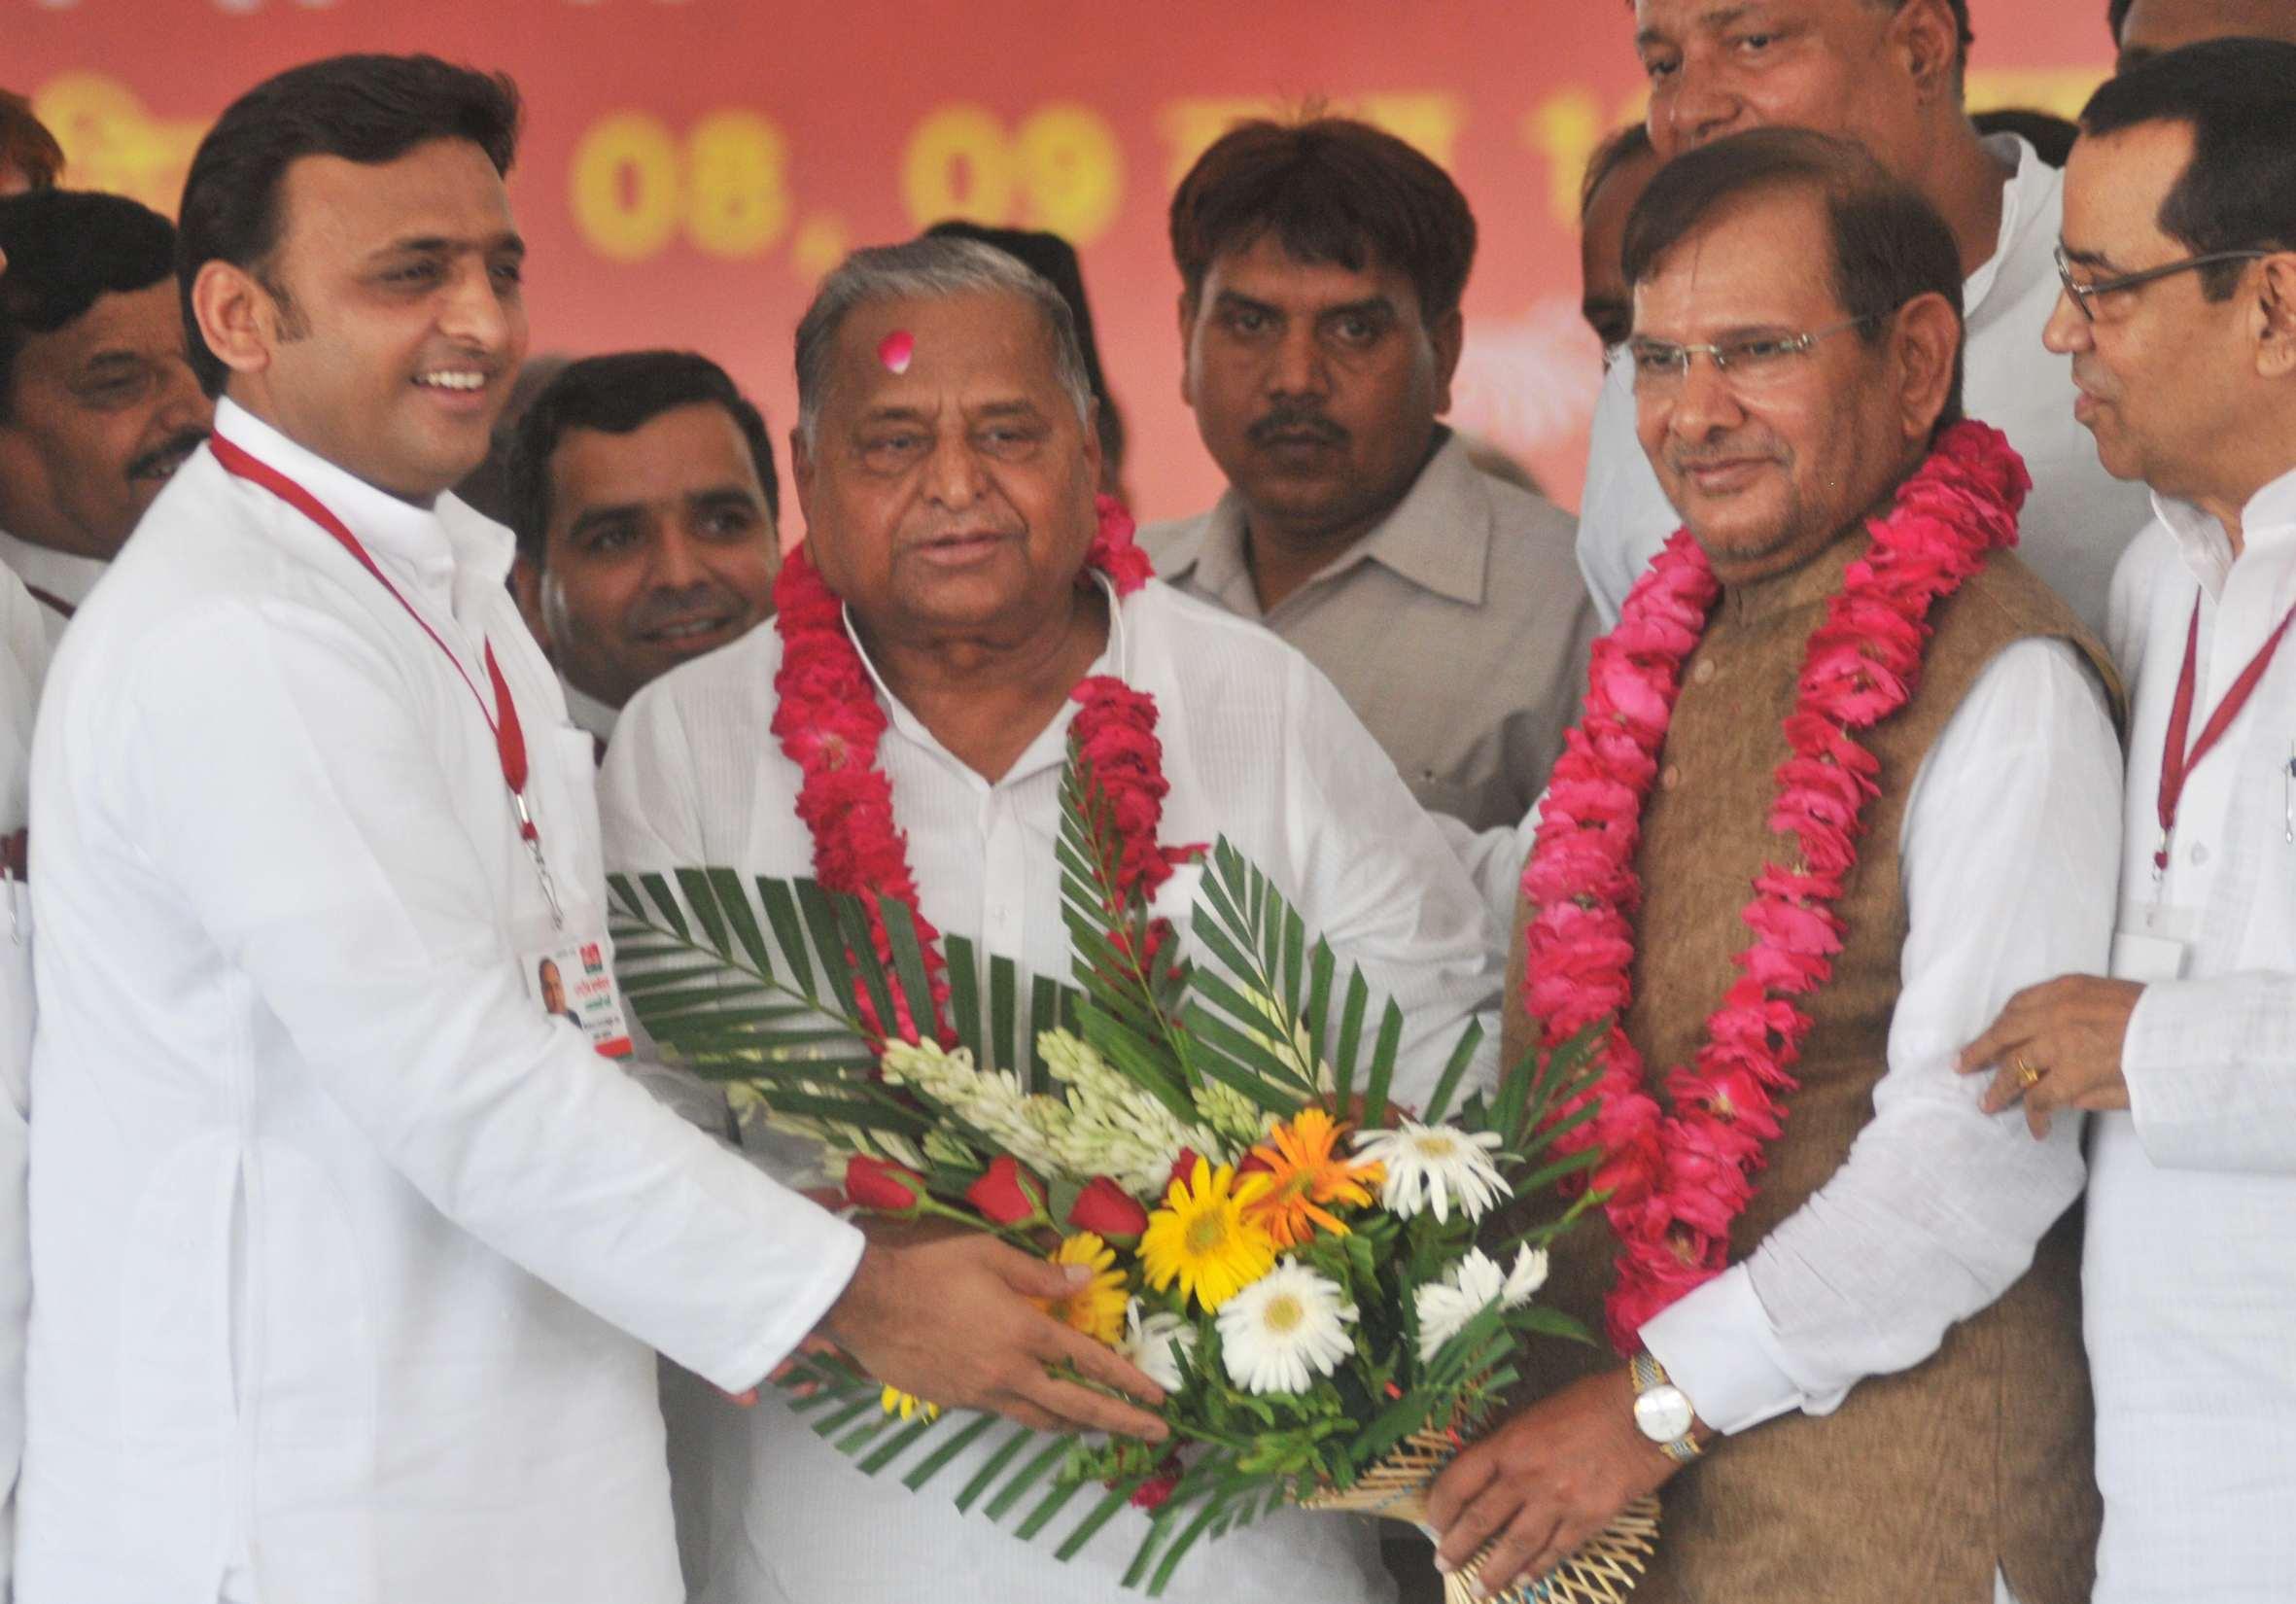 Uttar Pradesh Chief Minister Akhilesh Yadav, Samajwadi Party supremo Mulayam Singh Yadav and JD(U) chief Sharad Yadav during a Samajwadi Party programme in in Lucknow, on Oct.8, 2014